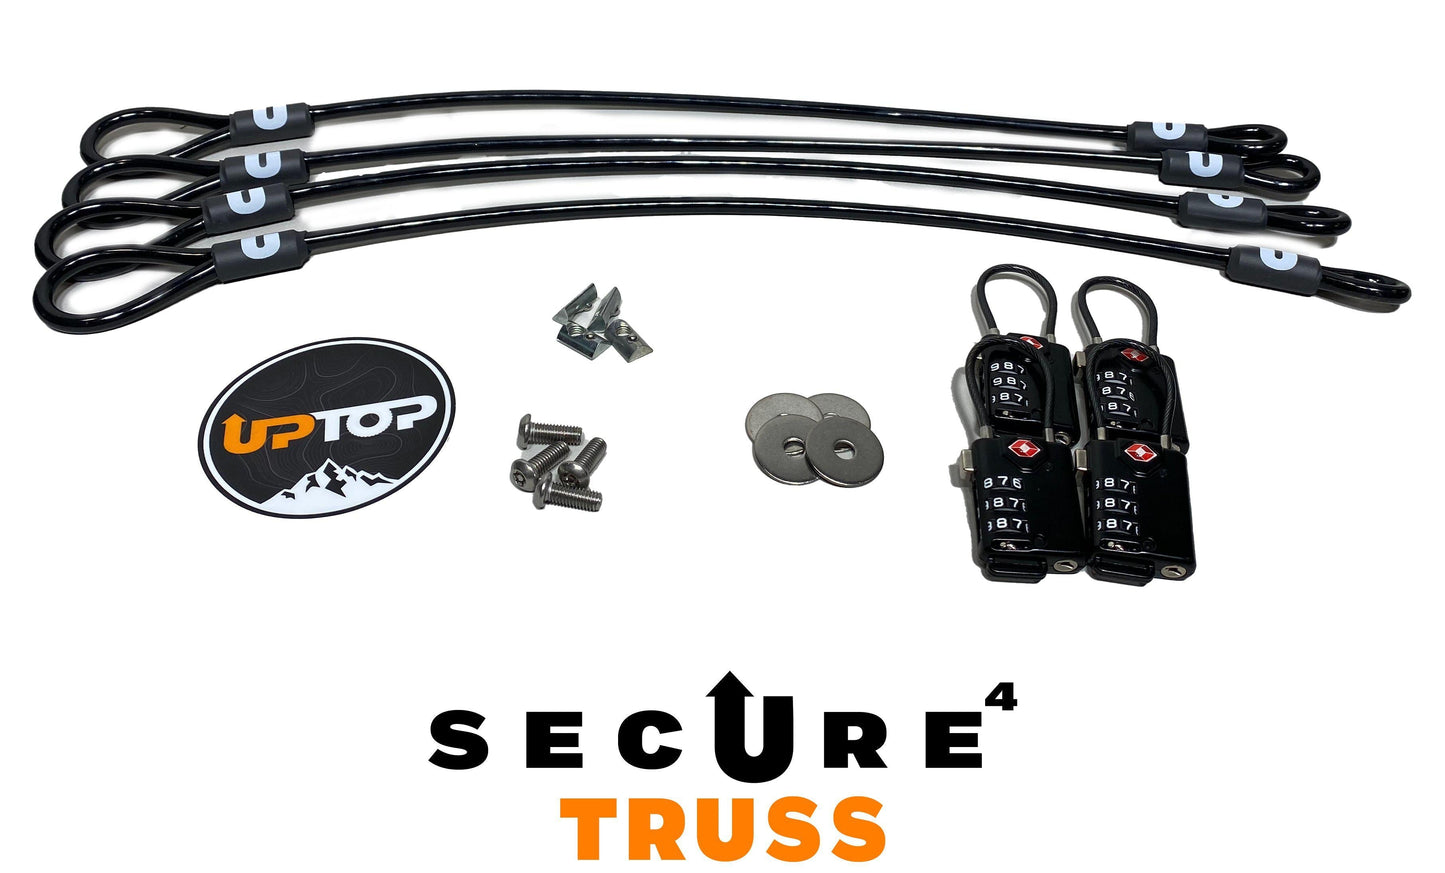 Secure TRUSS Locking System-Accessories-upTOP Overland-secure4-upTOP Overland